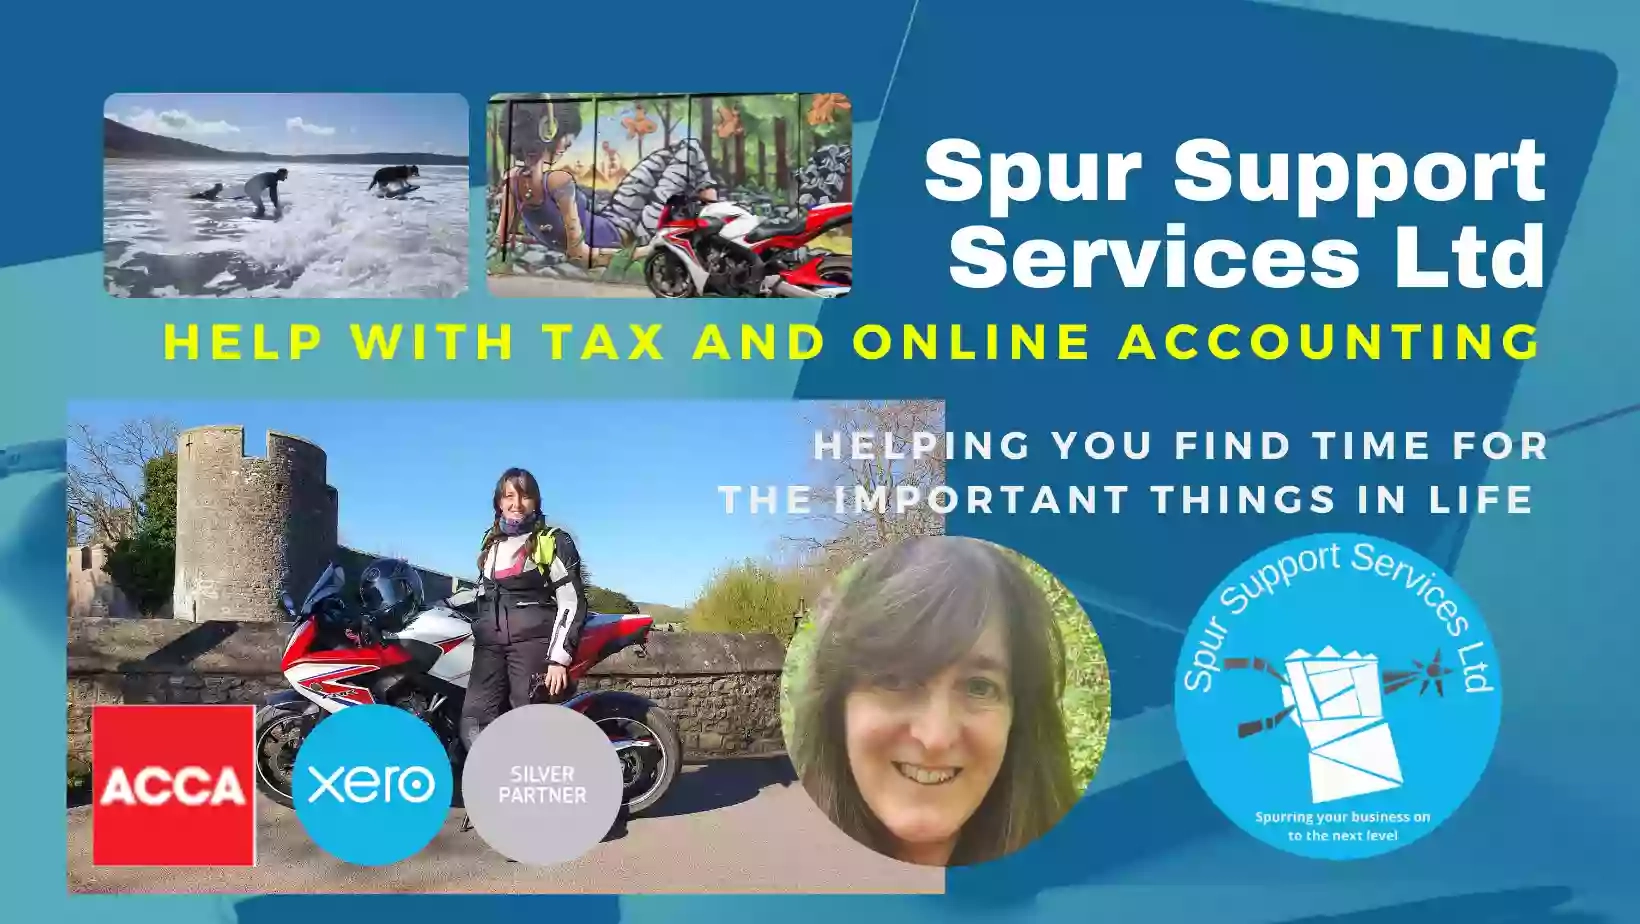 Spur Support Services Ltd